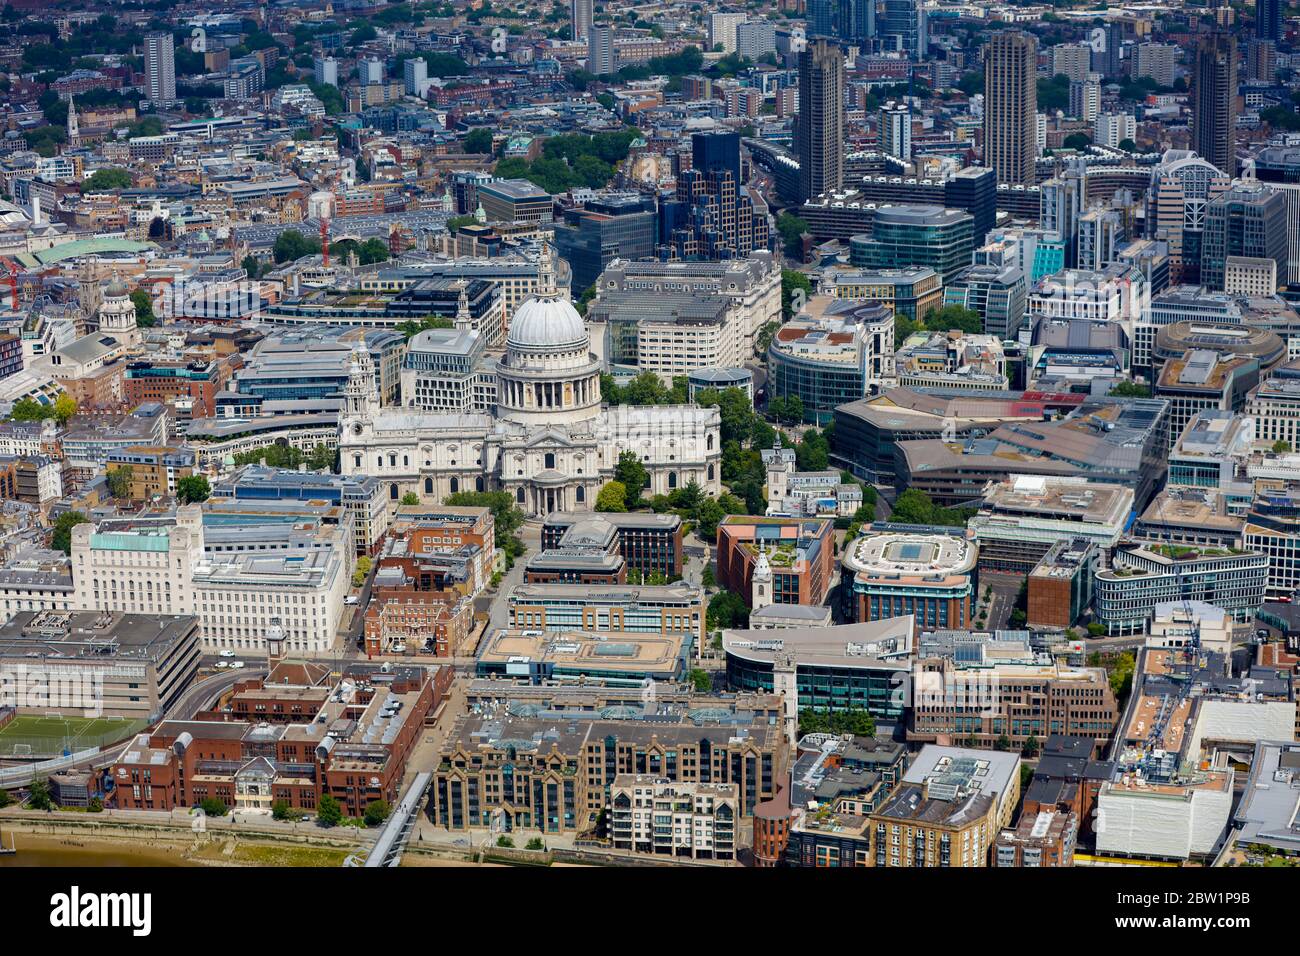 Vista aérea de la Catedral de San Pablo, Londres, Reino Unido Foto de stock